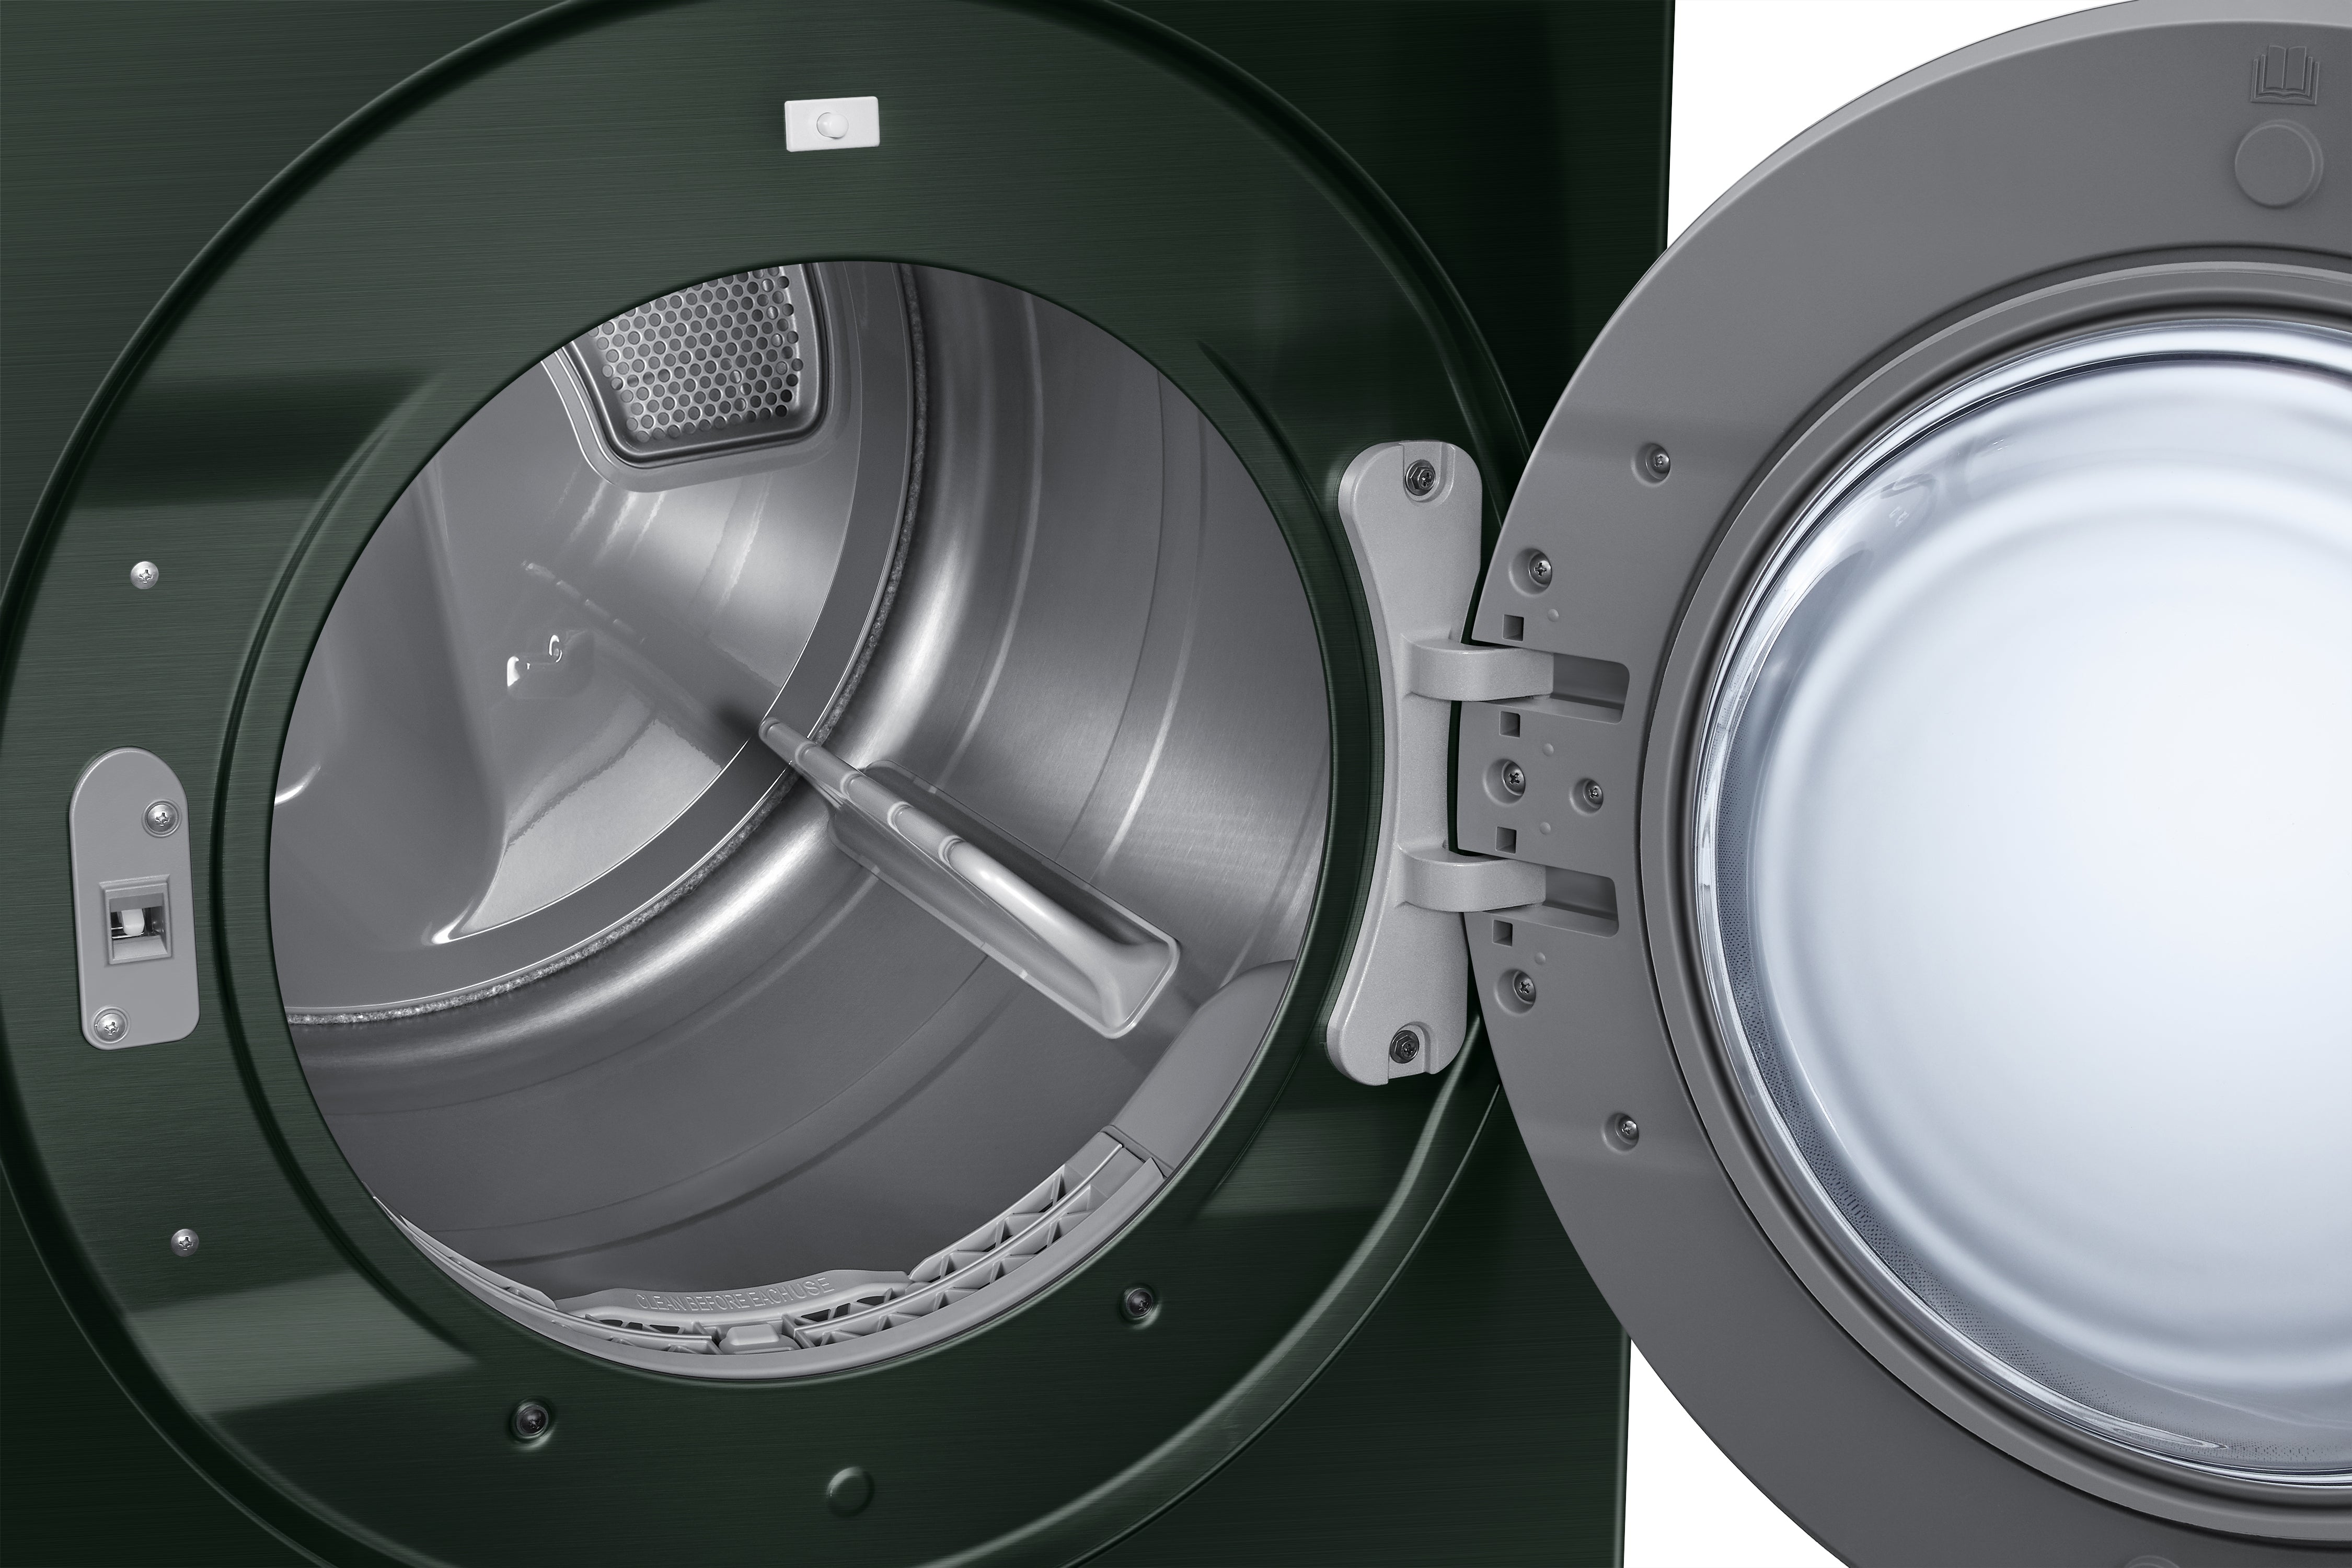 Samsung - 7.6 cu. Ft  Electric Dryer in Green - DVE53BB8900GAC